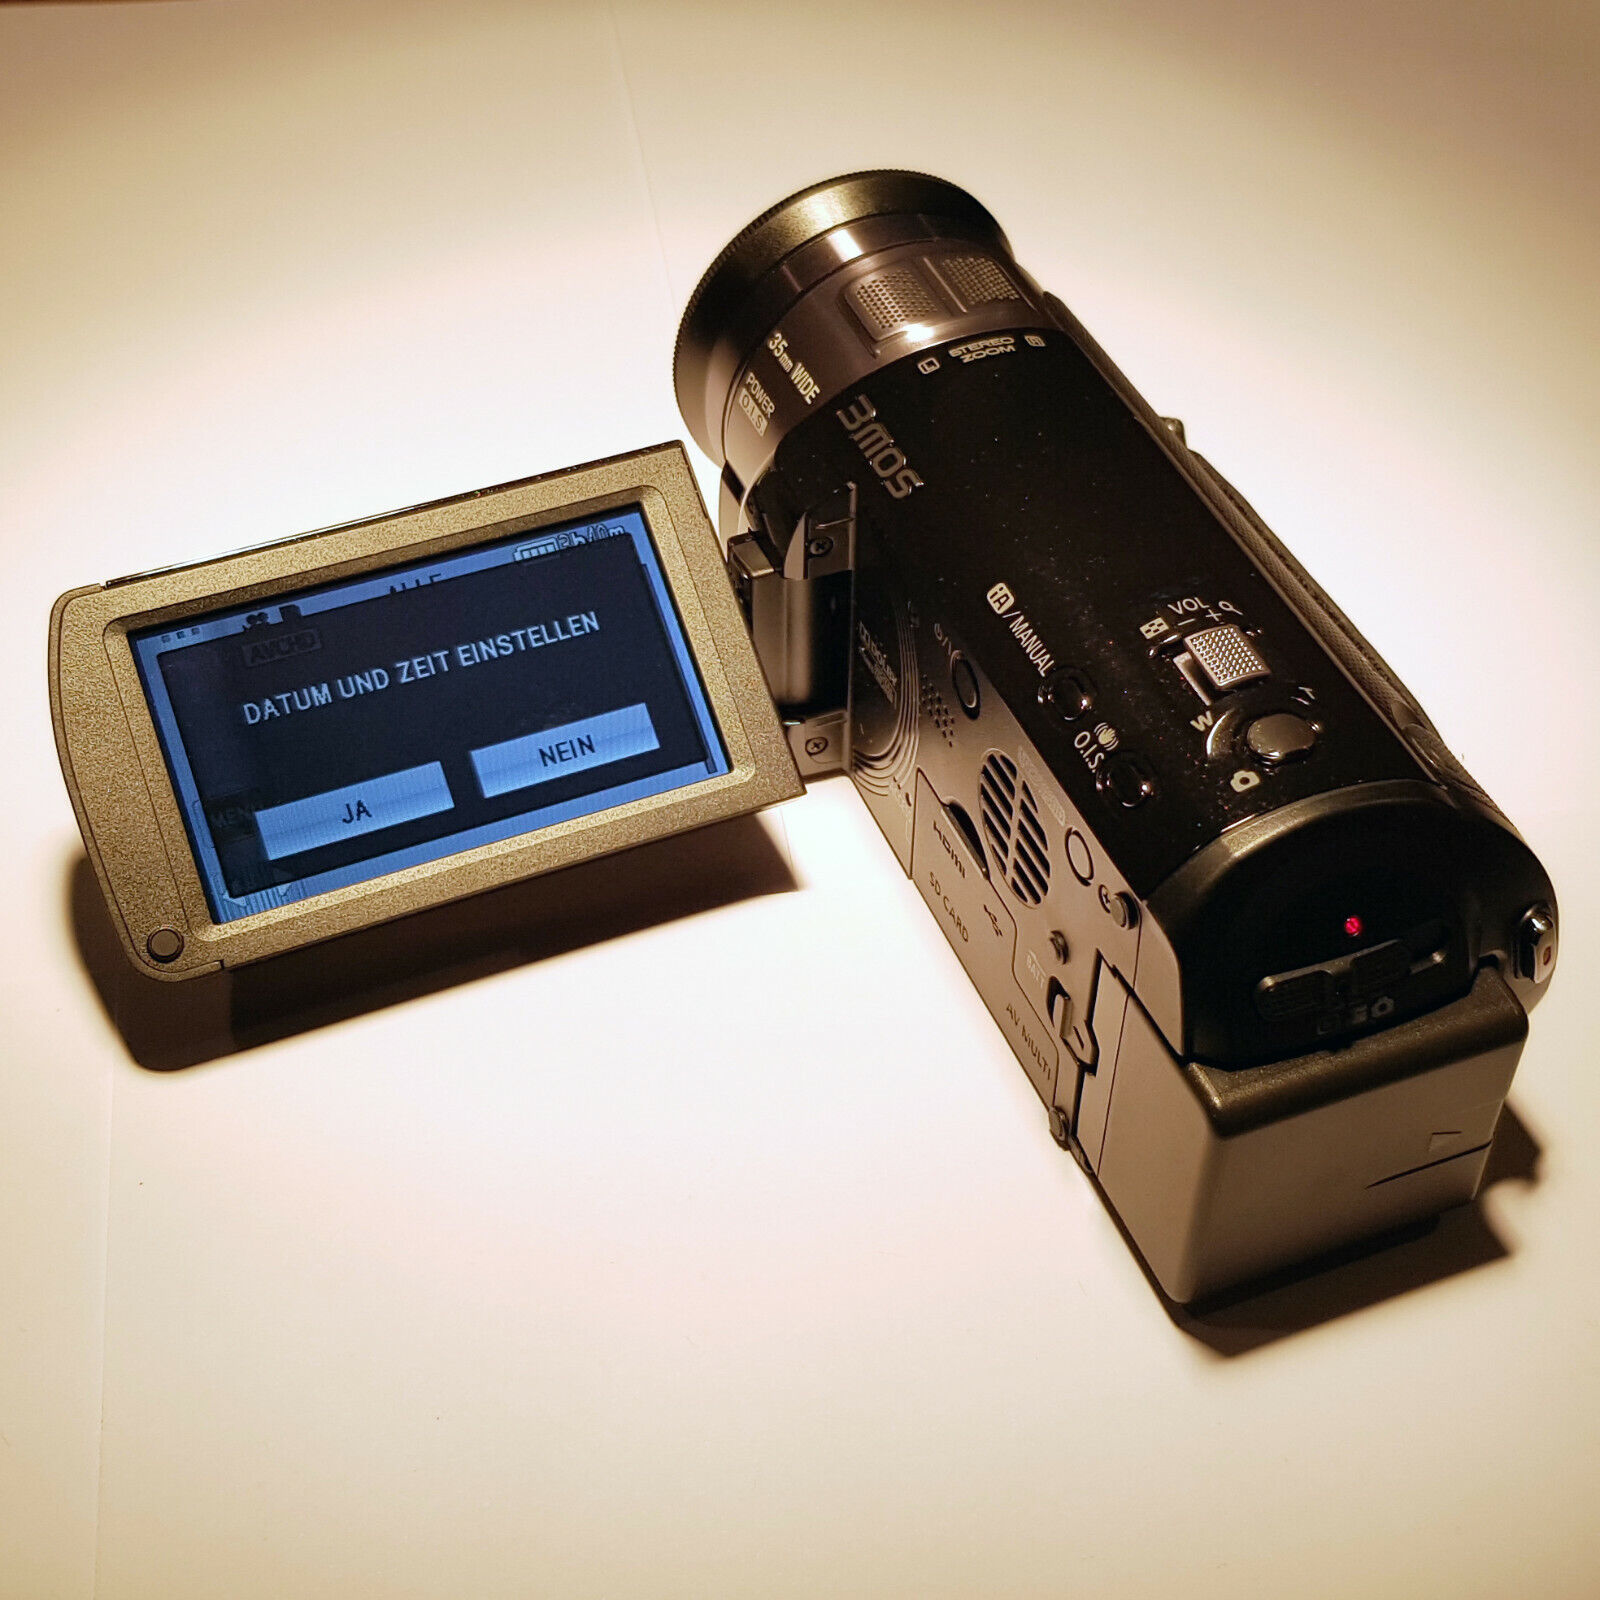 NEU & OVP: Panasonic HDC-SD800 Full-HD-Camcorder mit Zubehörpaket